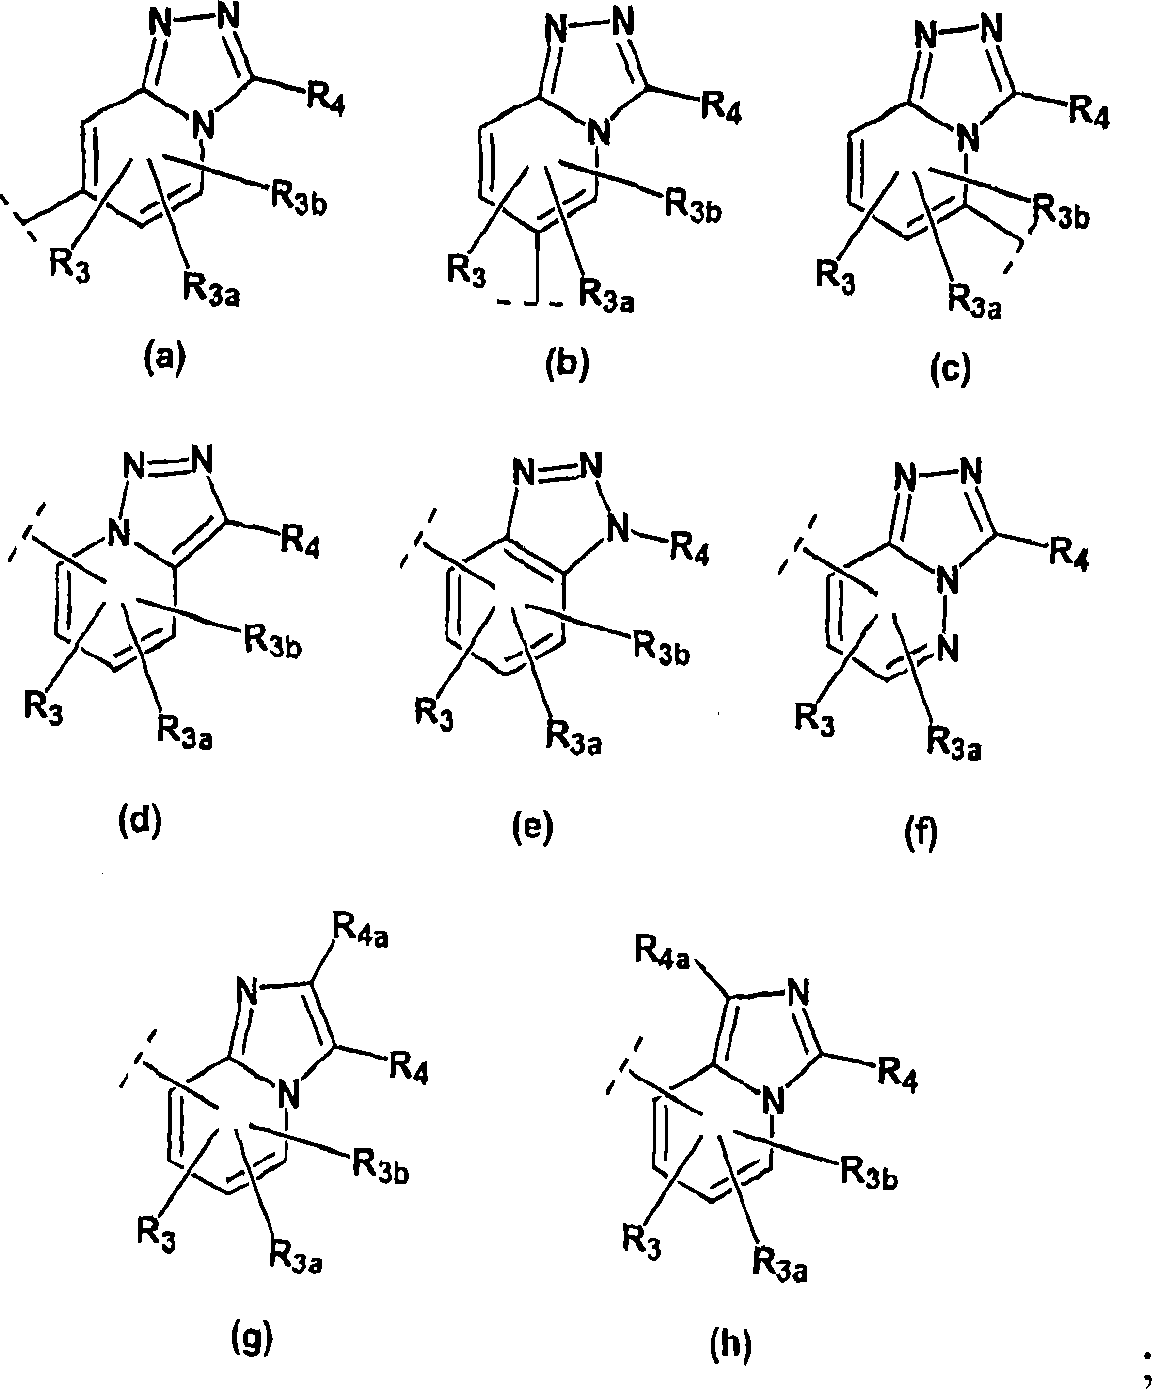 Imidazo- and triazolopyridines as inhibitors of 11-beta hydroxysteroid dehyftogenase type I